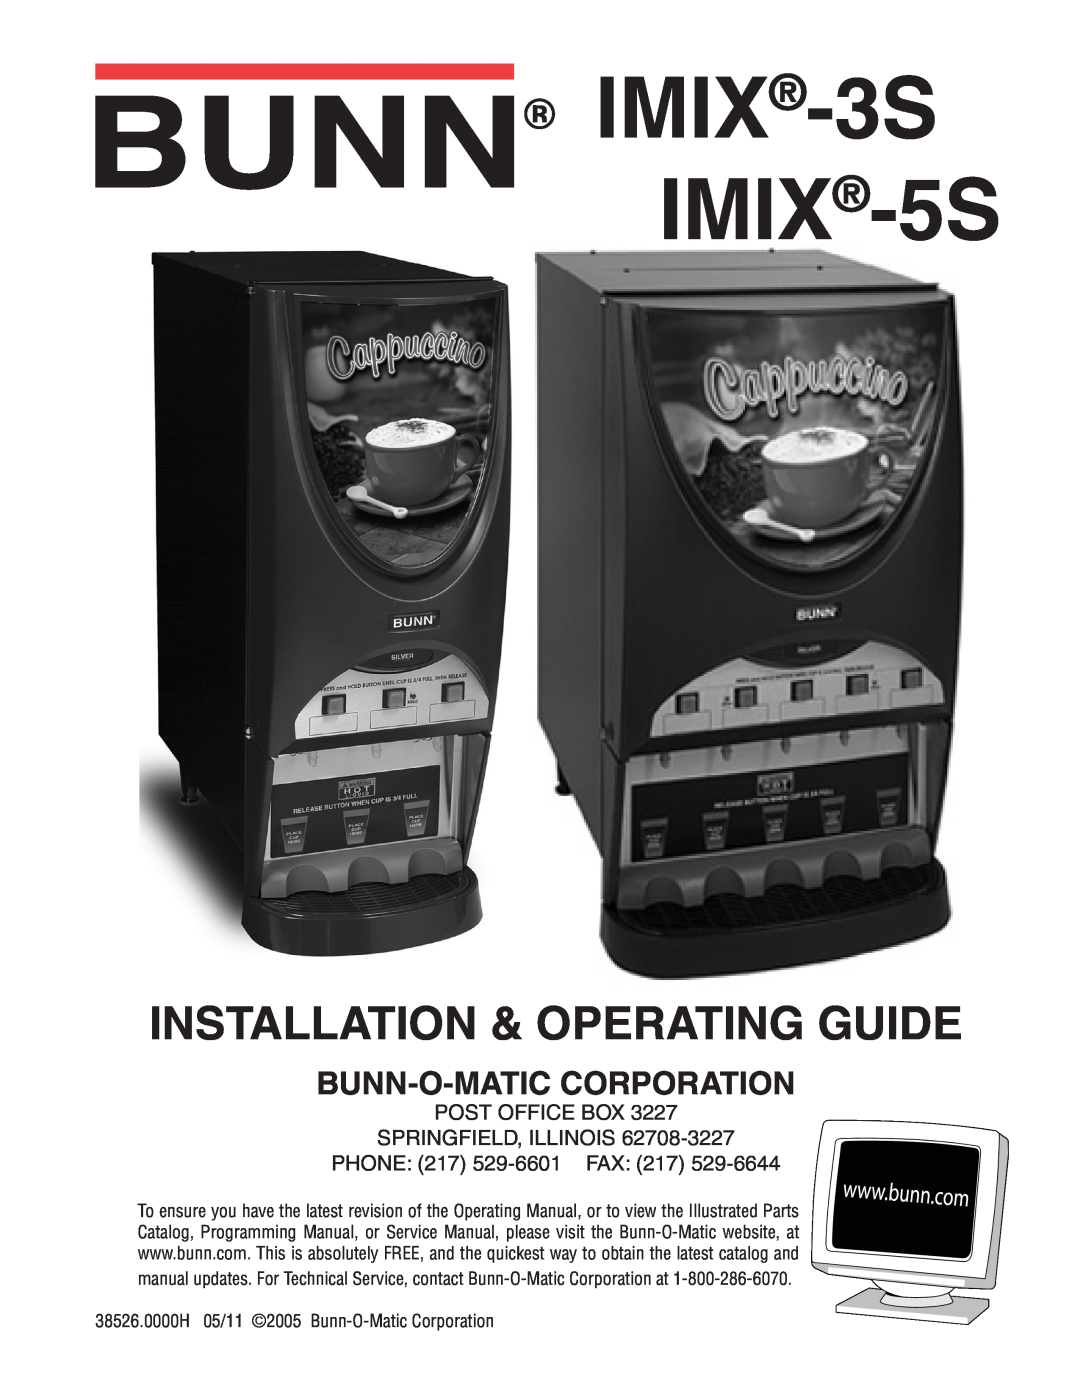 Bunn service manual IMIX-3S IMIX-5S, Installation & Operating Guide, Bunn-O-Matic Corporation 